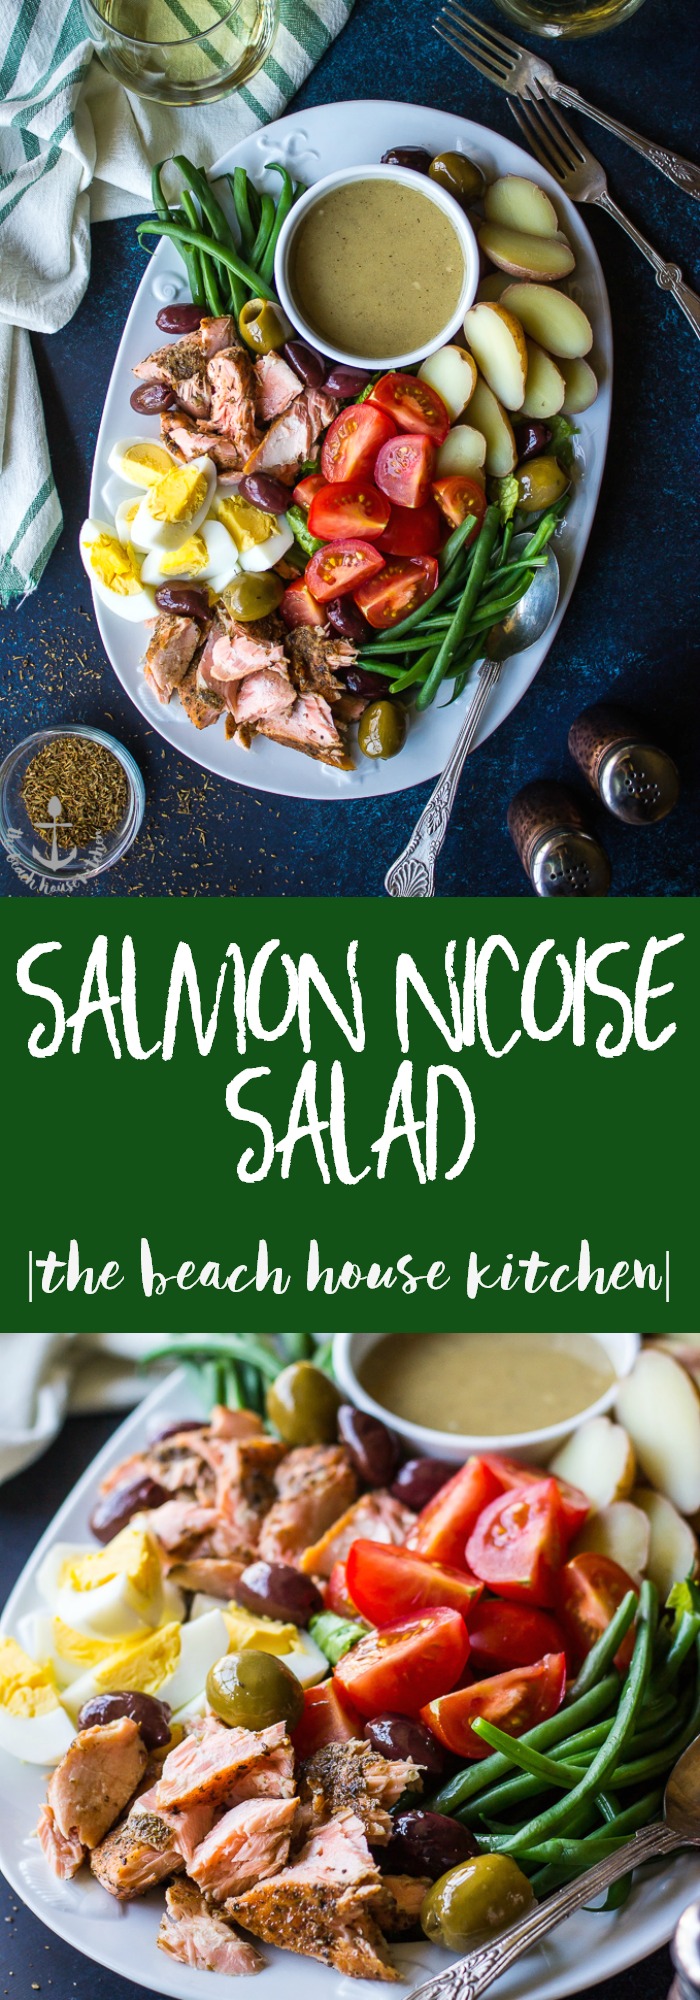 Salmon Nicoise Salad with Dijon Vinaigrette